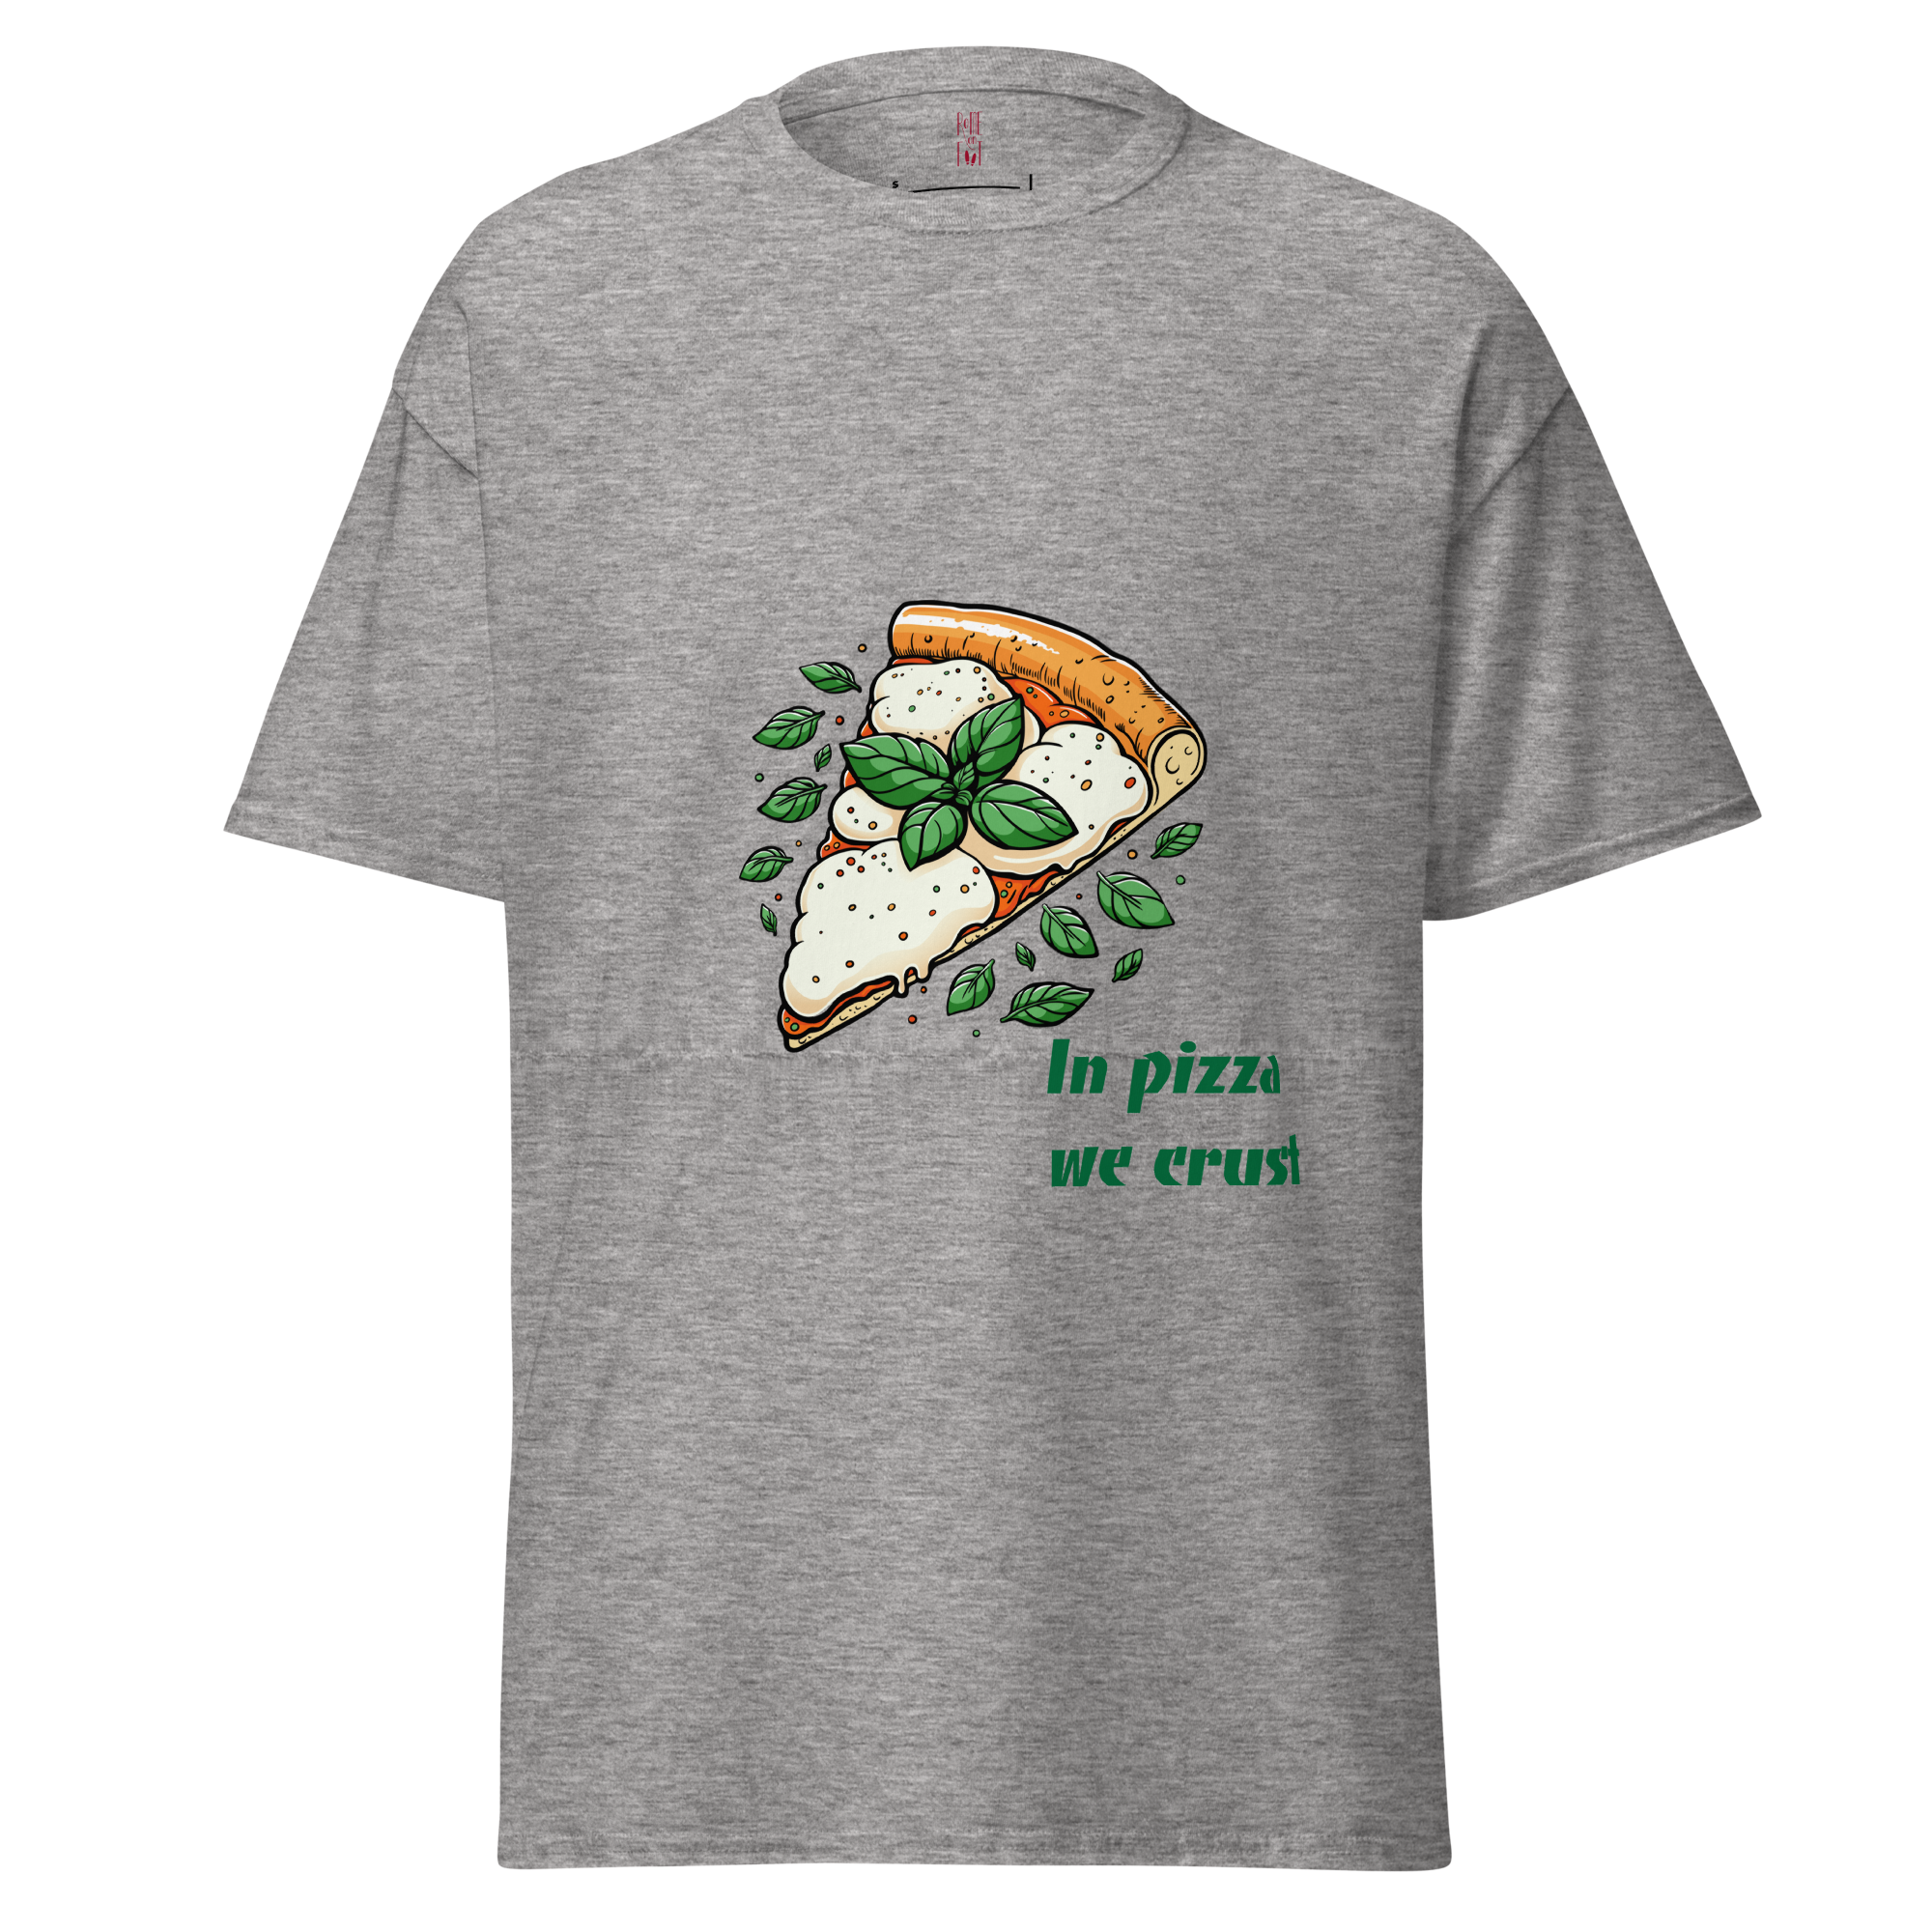 Urban Edge Cotton T-Shirt with Pizza Motif